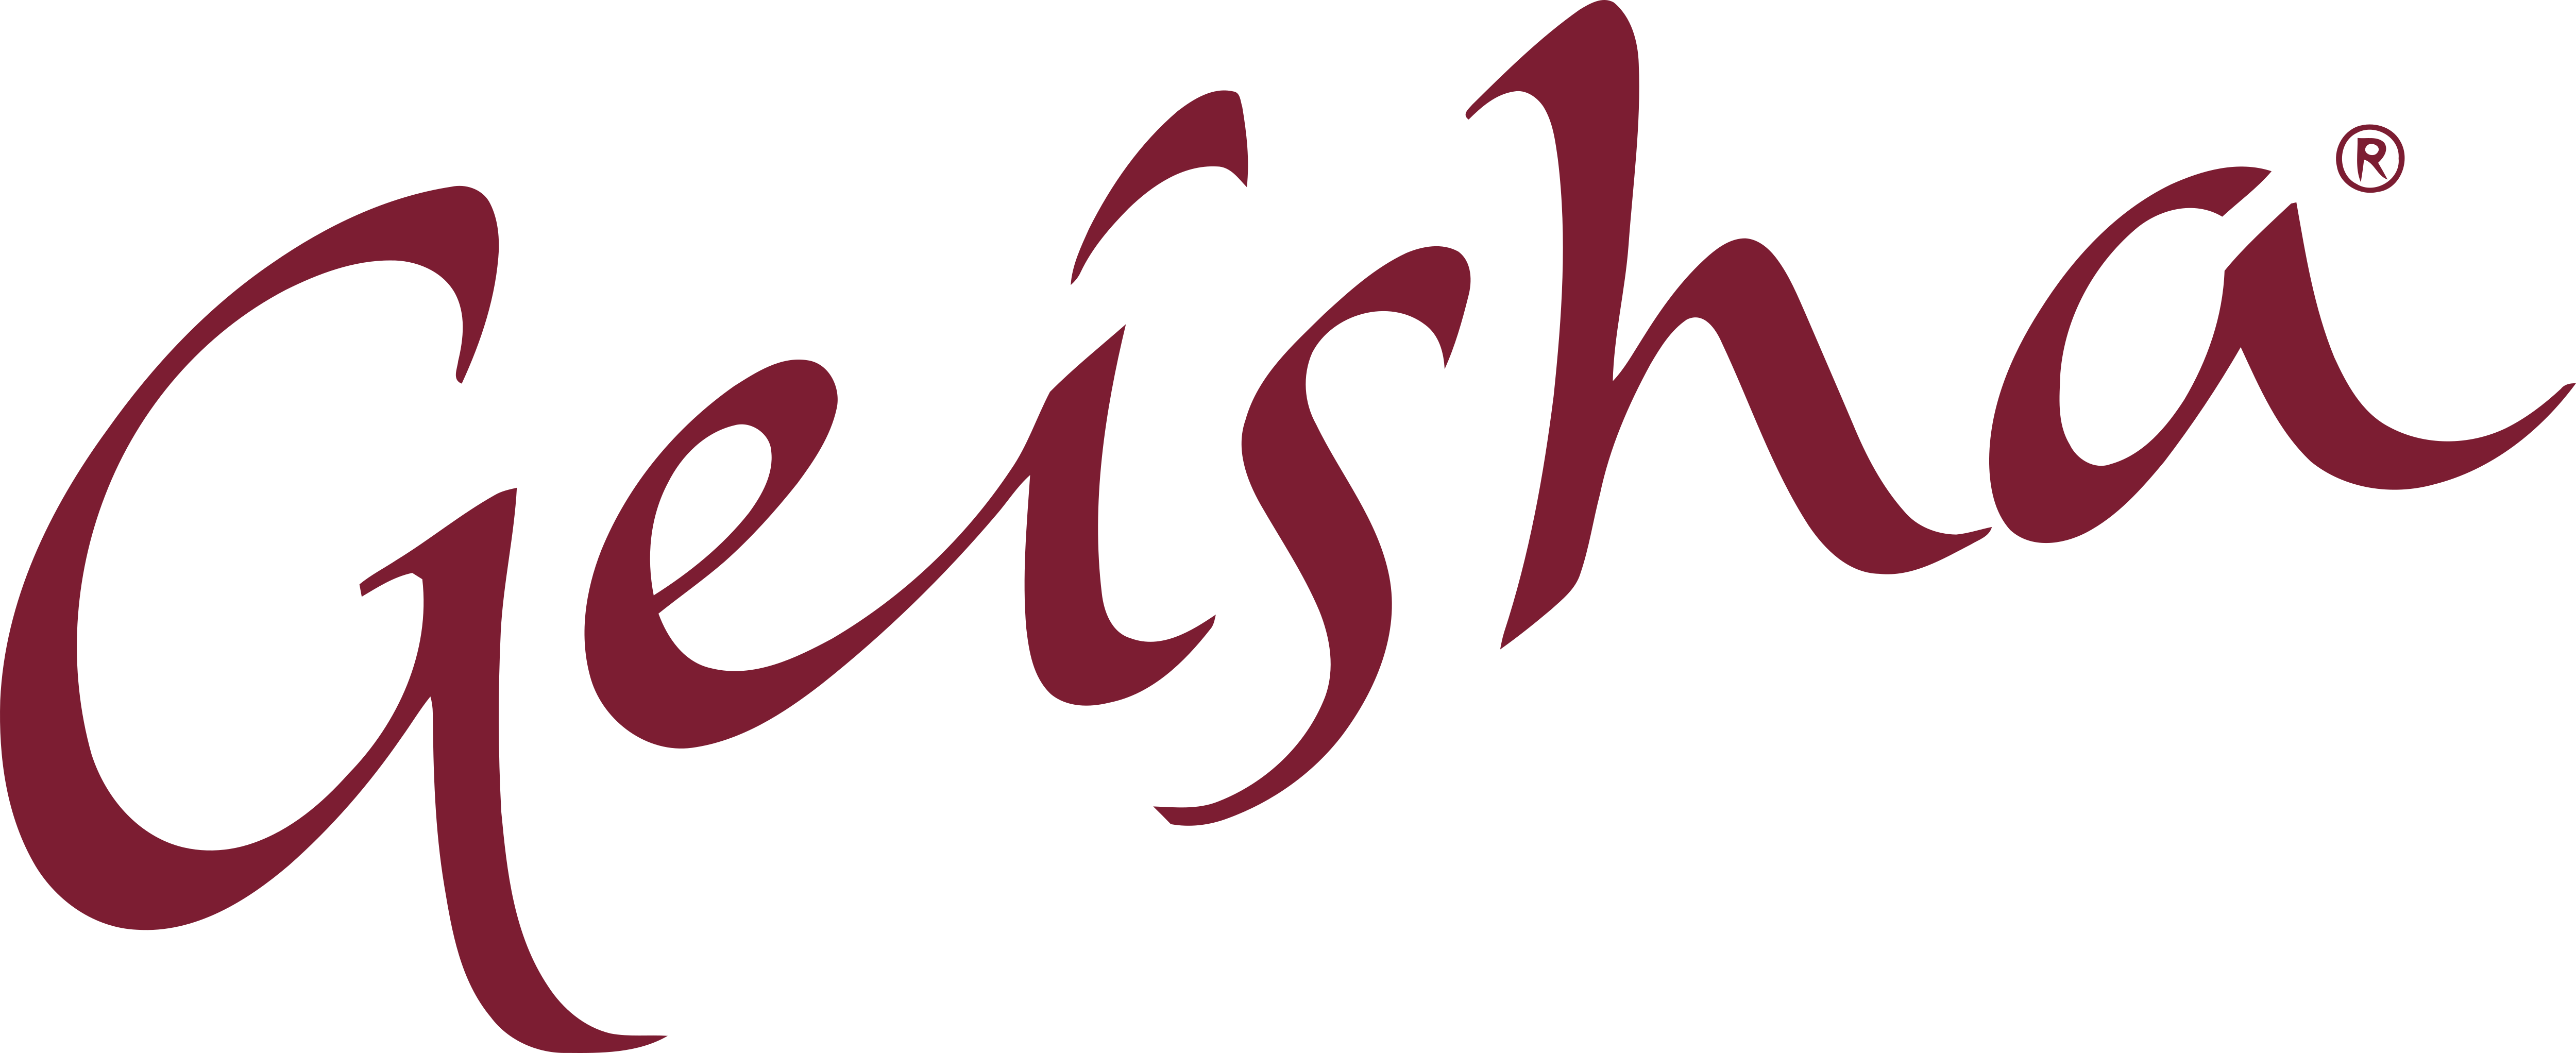 Geisha Logo Png Transparent Svg Vector Freebie Supply - kulturaupice